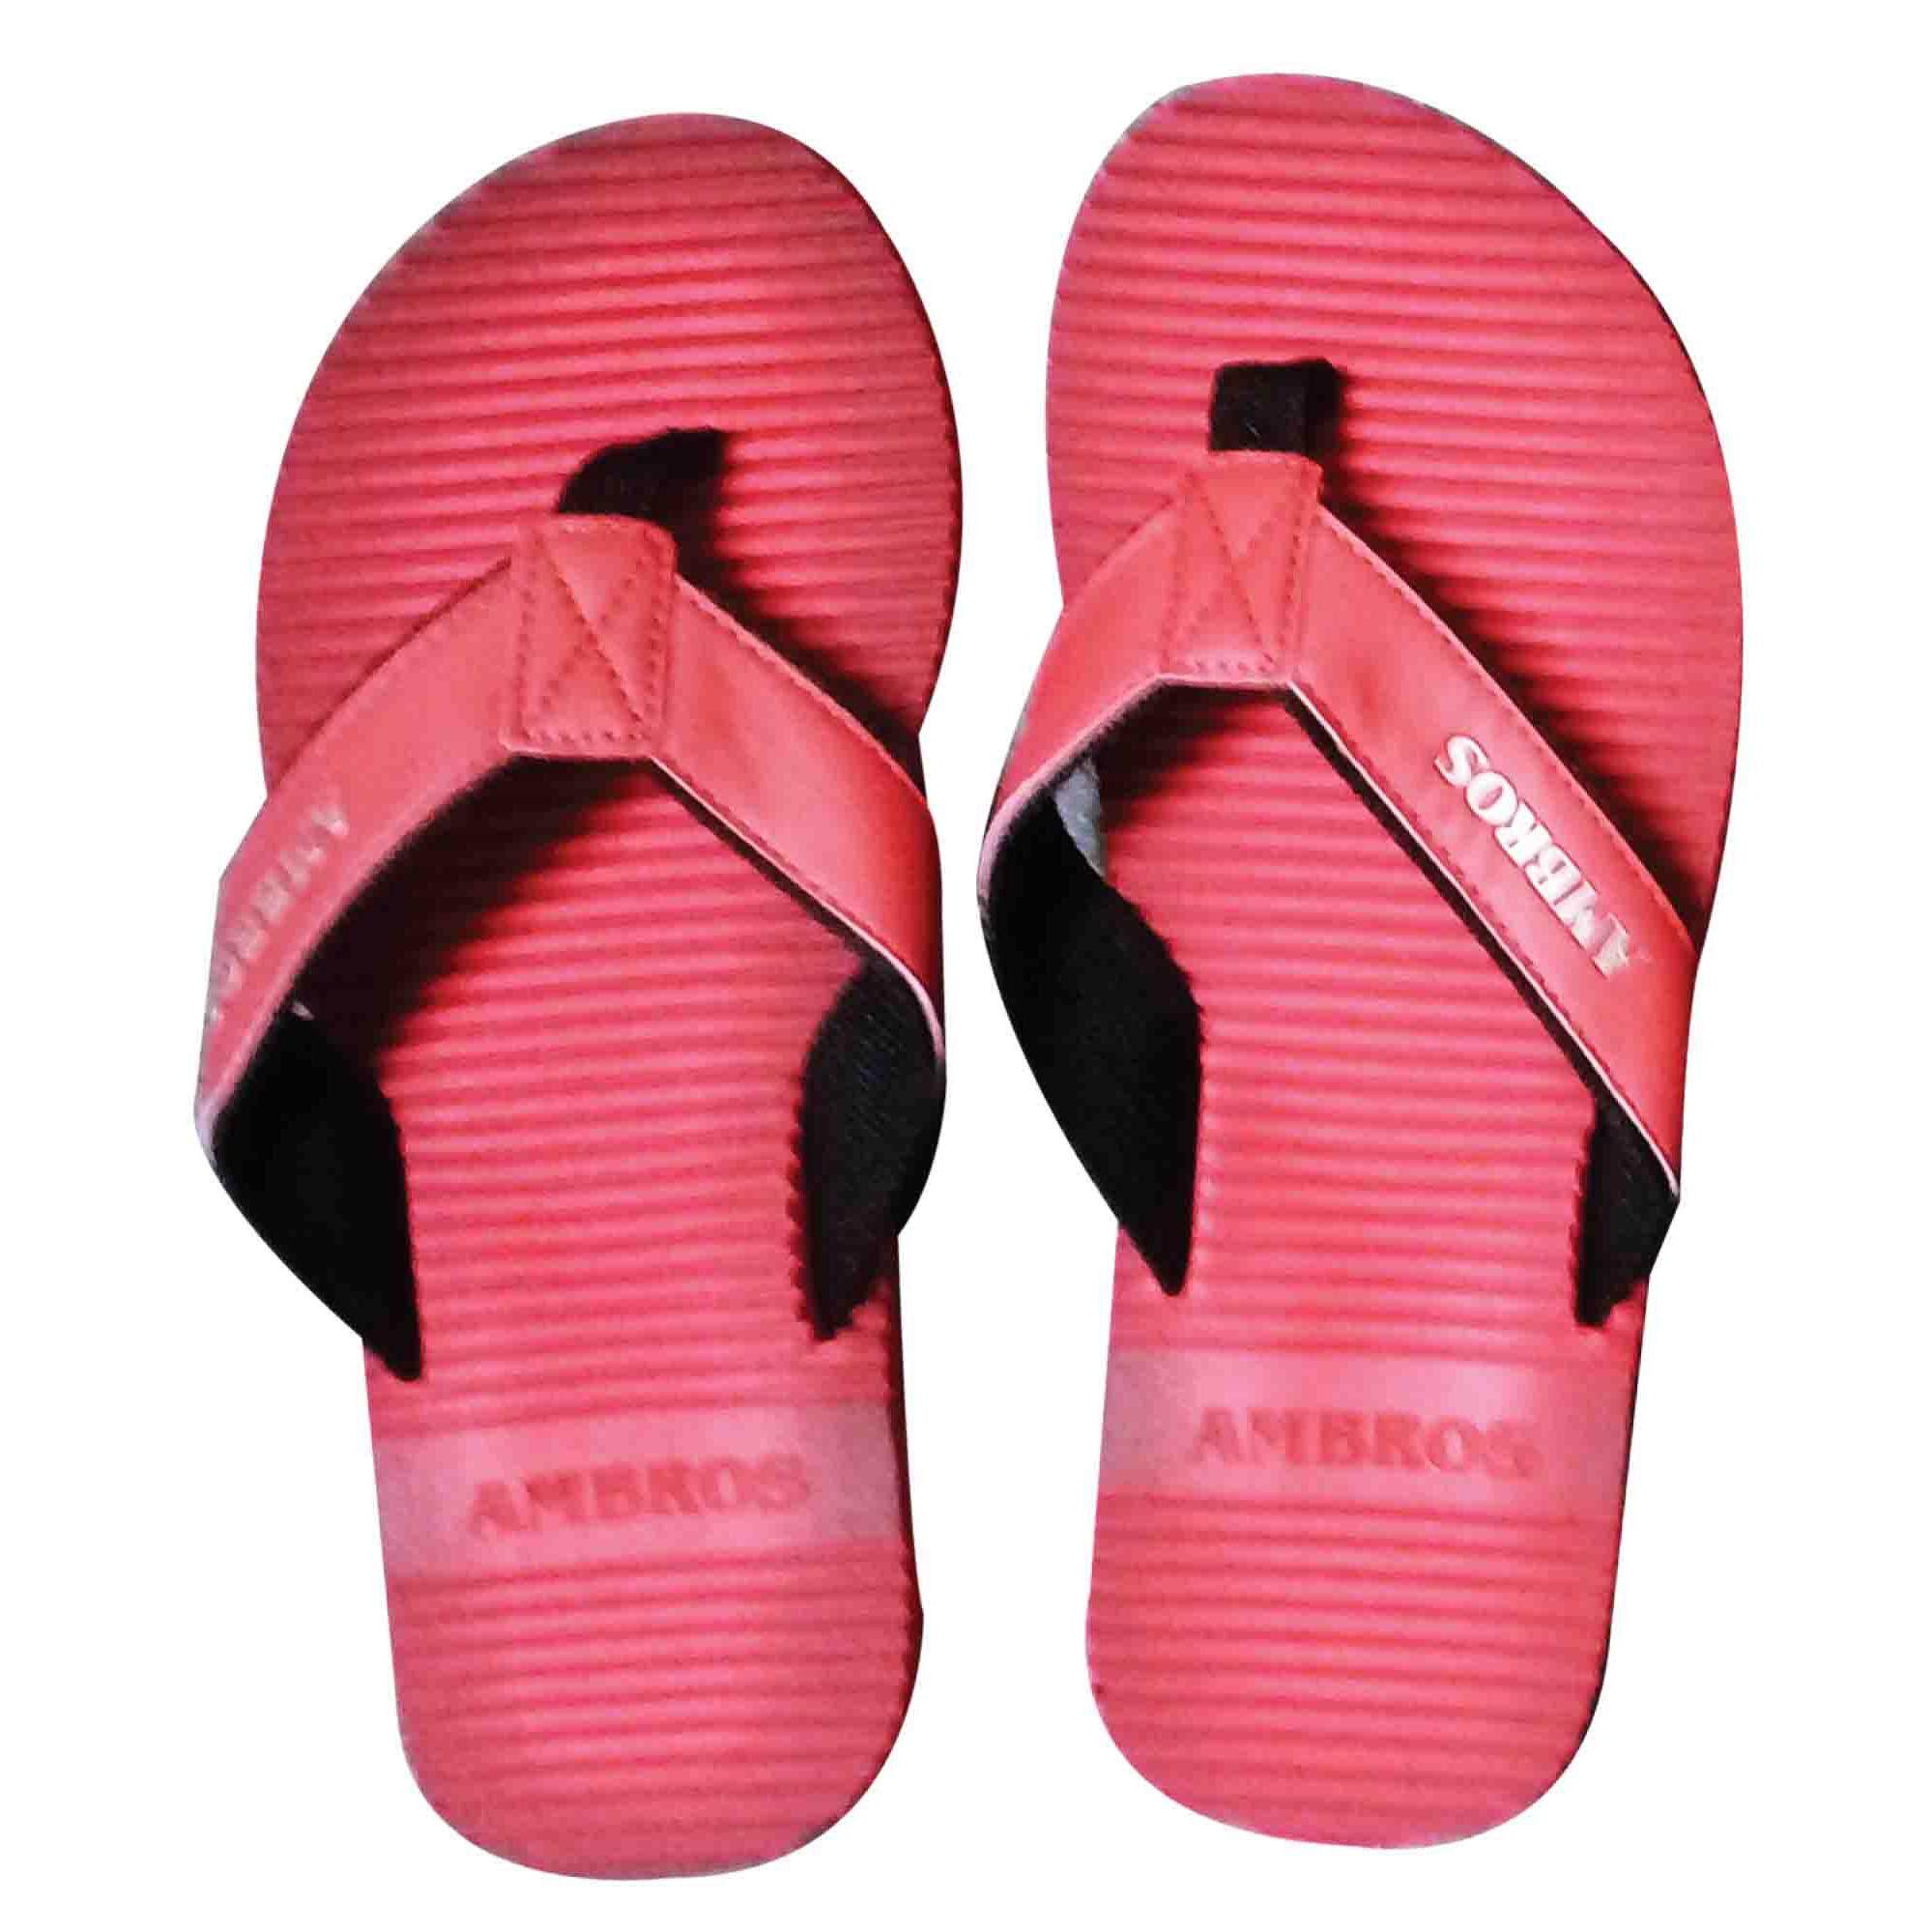 Ambros Comforty Flip-Flop Sandals Slippers - Red/Black